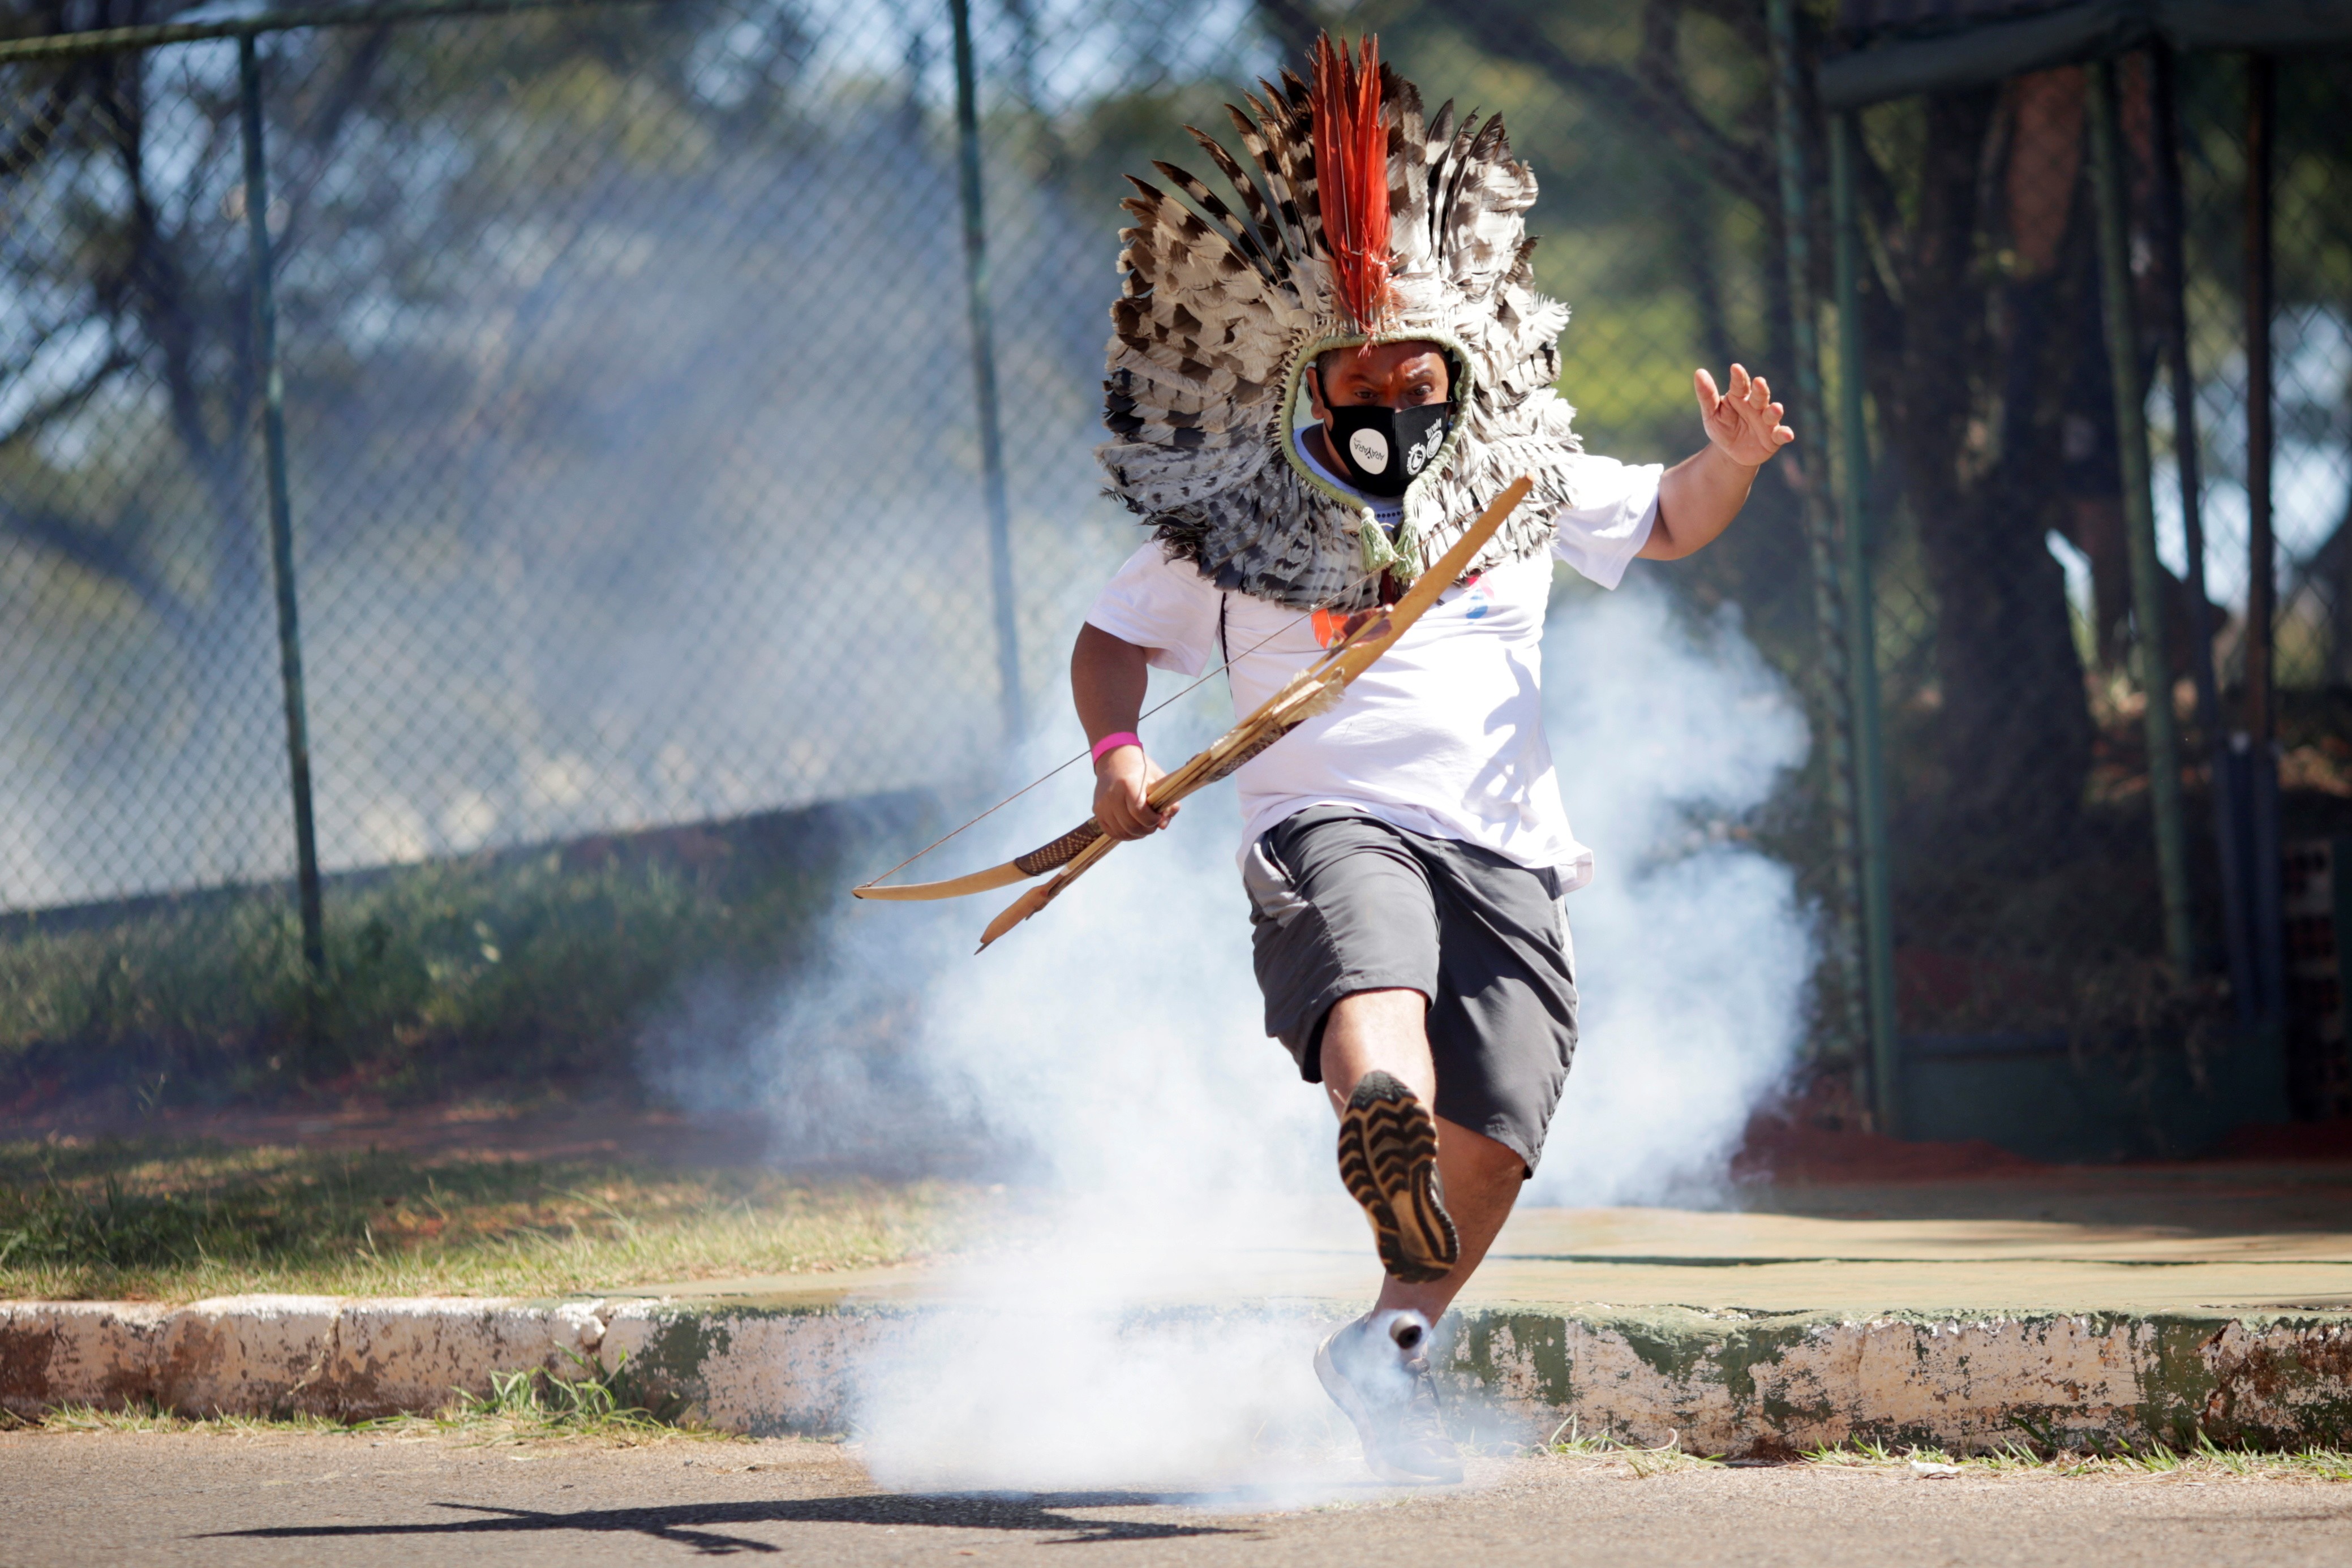 Líder indígena Kretan Kaingang chuta de volta bomba de gás lacrimogêneo lançada pela polícia contra indígenas durante protesto em frente ao Congresso 22/06/2021 (Foto: REUTERS/Ueslei Marcelino)